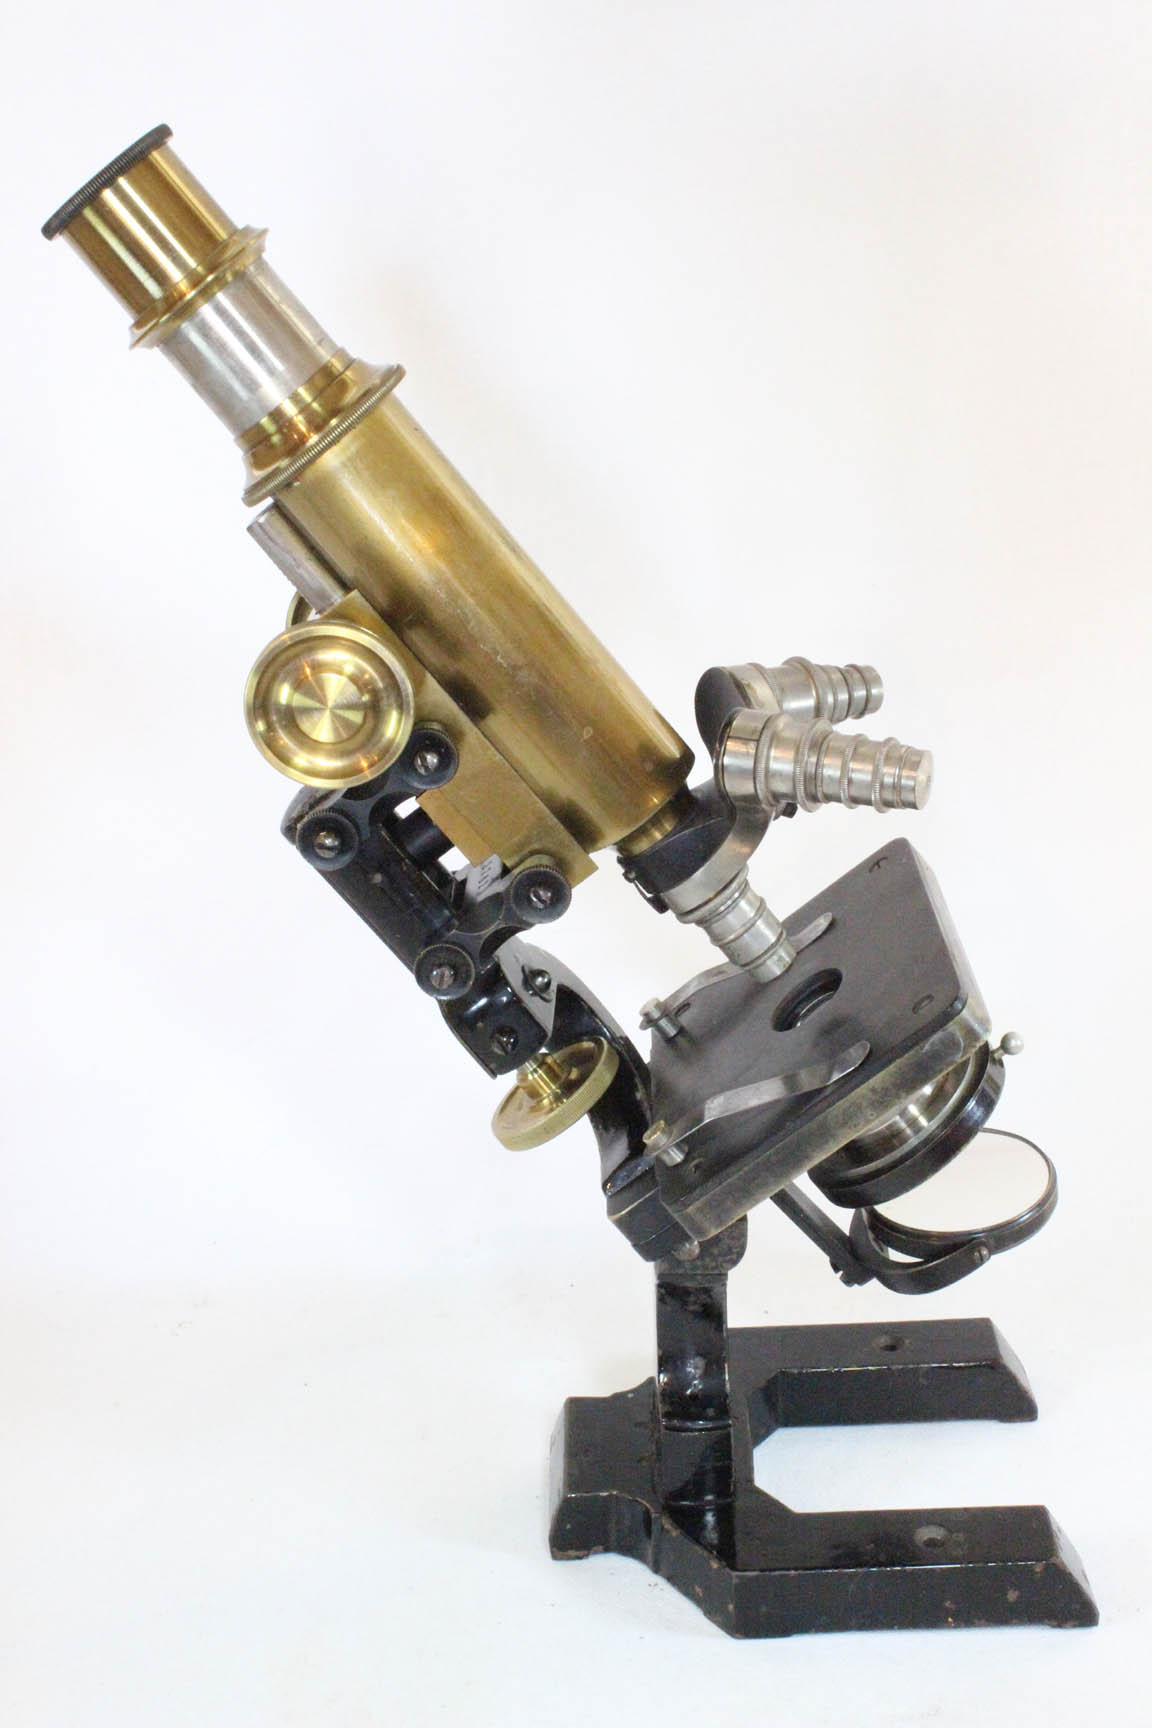 Krugelstein Microscope